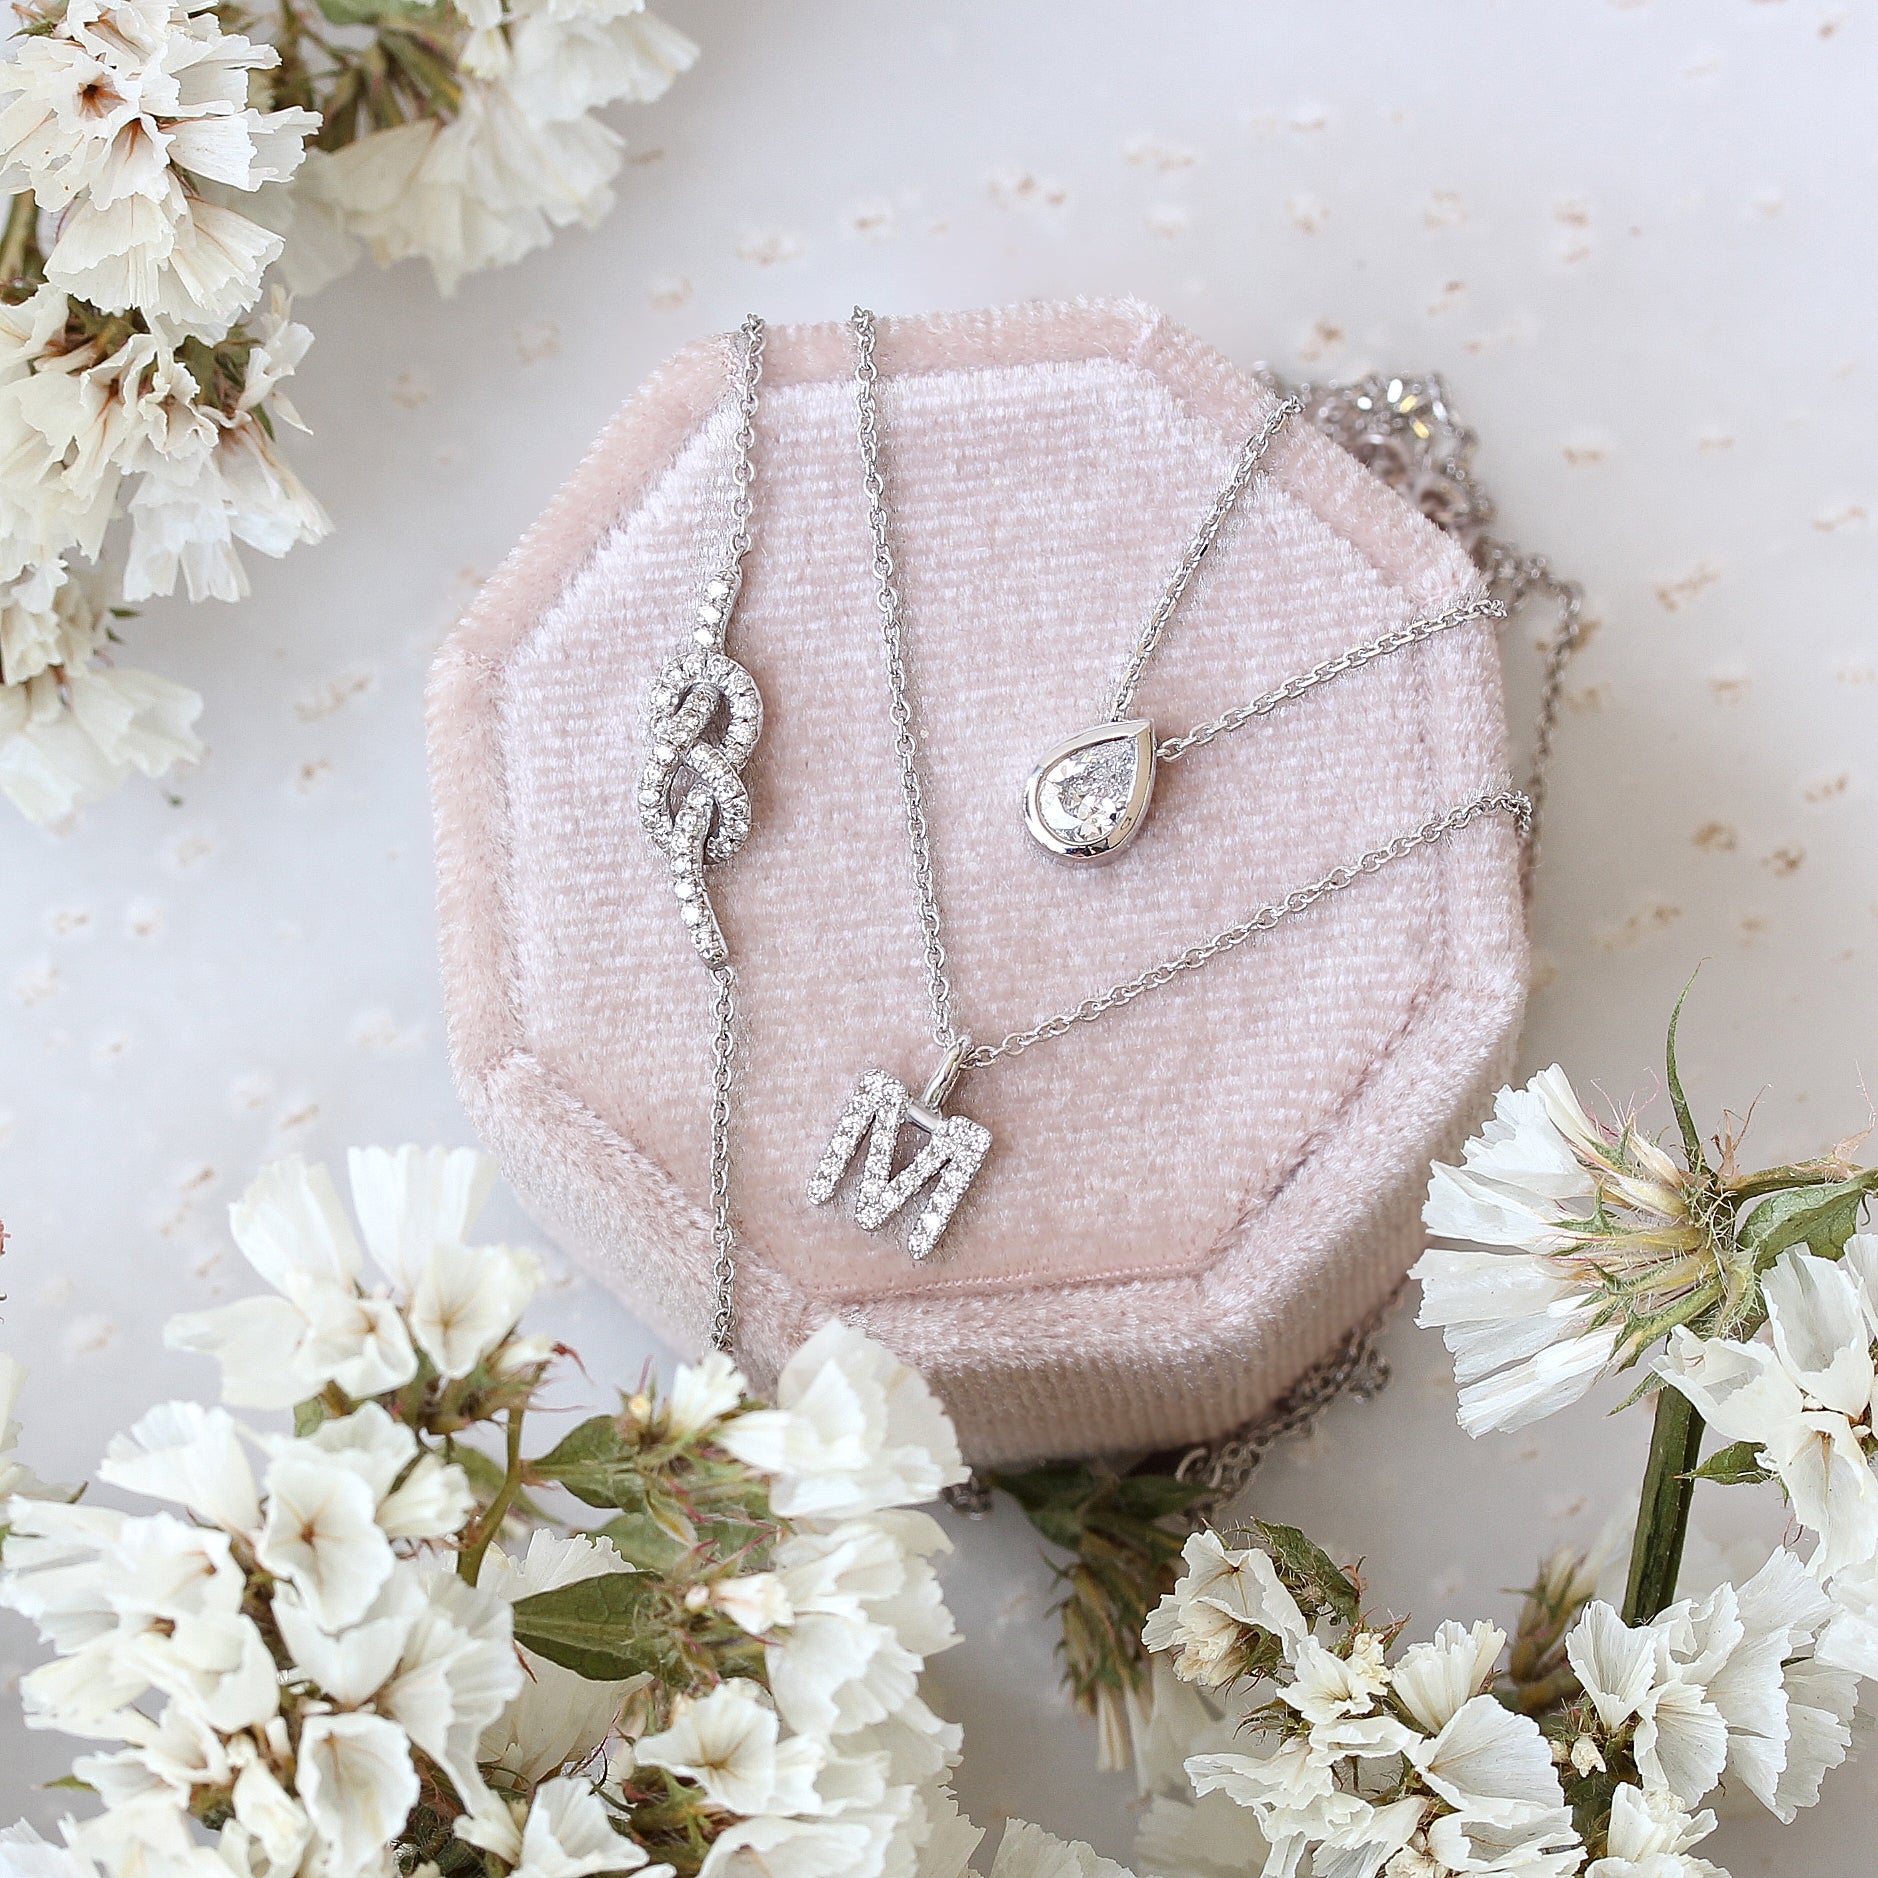 Pear Diamond Bezel Setting Pendant Necklace - sillyshinydiamonds